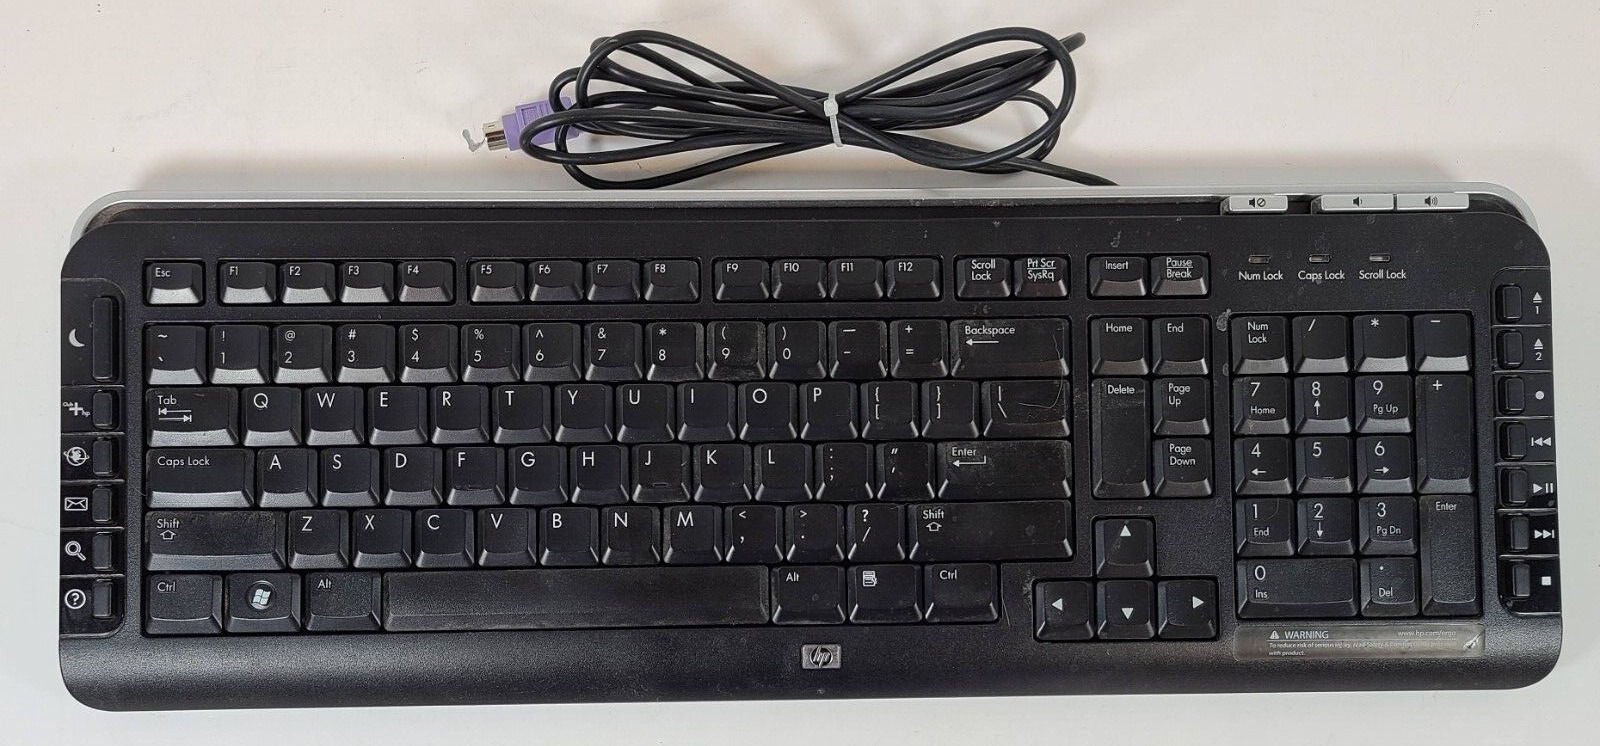 HP Genuine Wired PS/2 Keyboard Model No. 5188-6077 Rev. 2.4 Black KB-0630